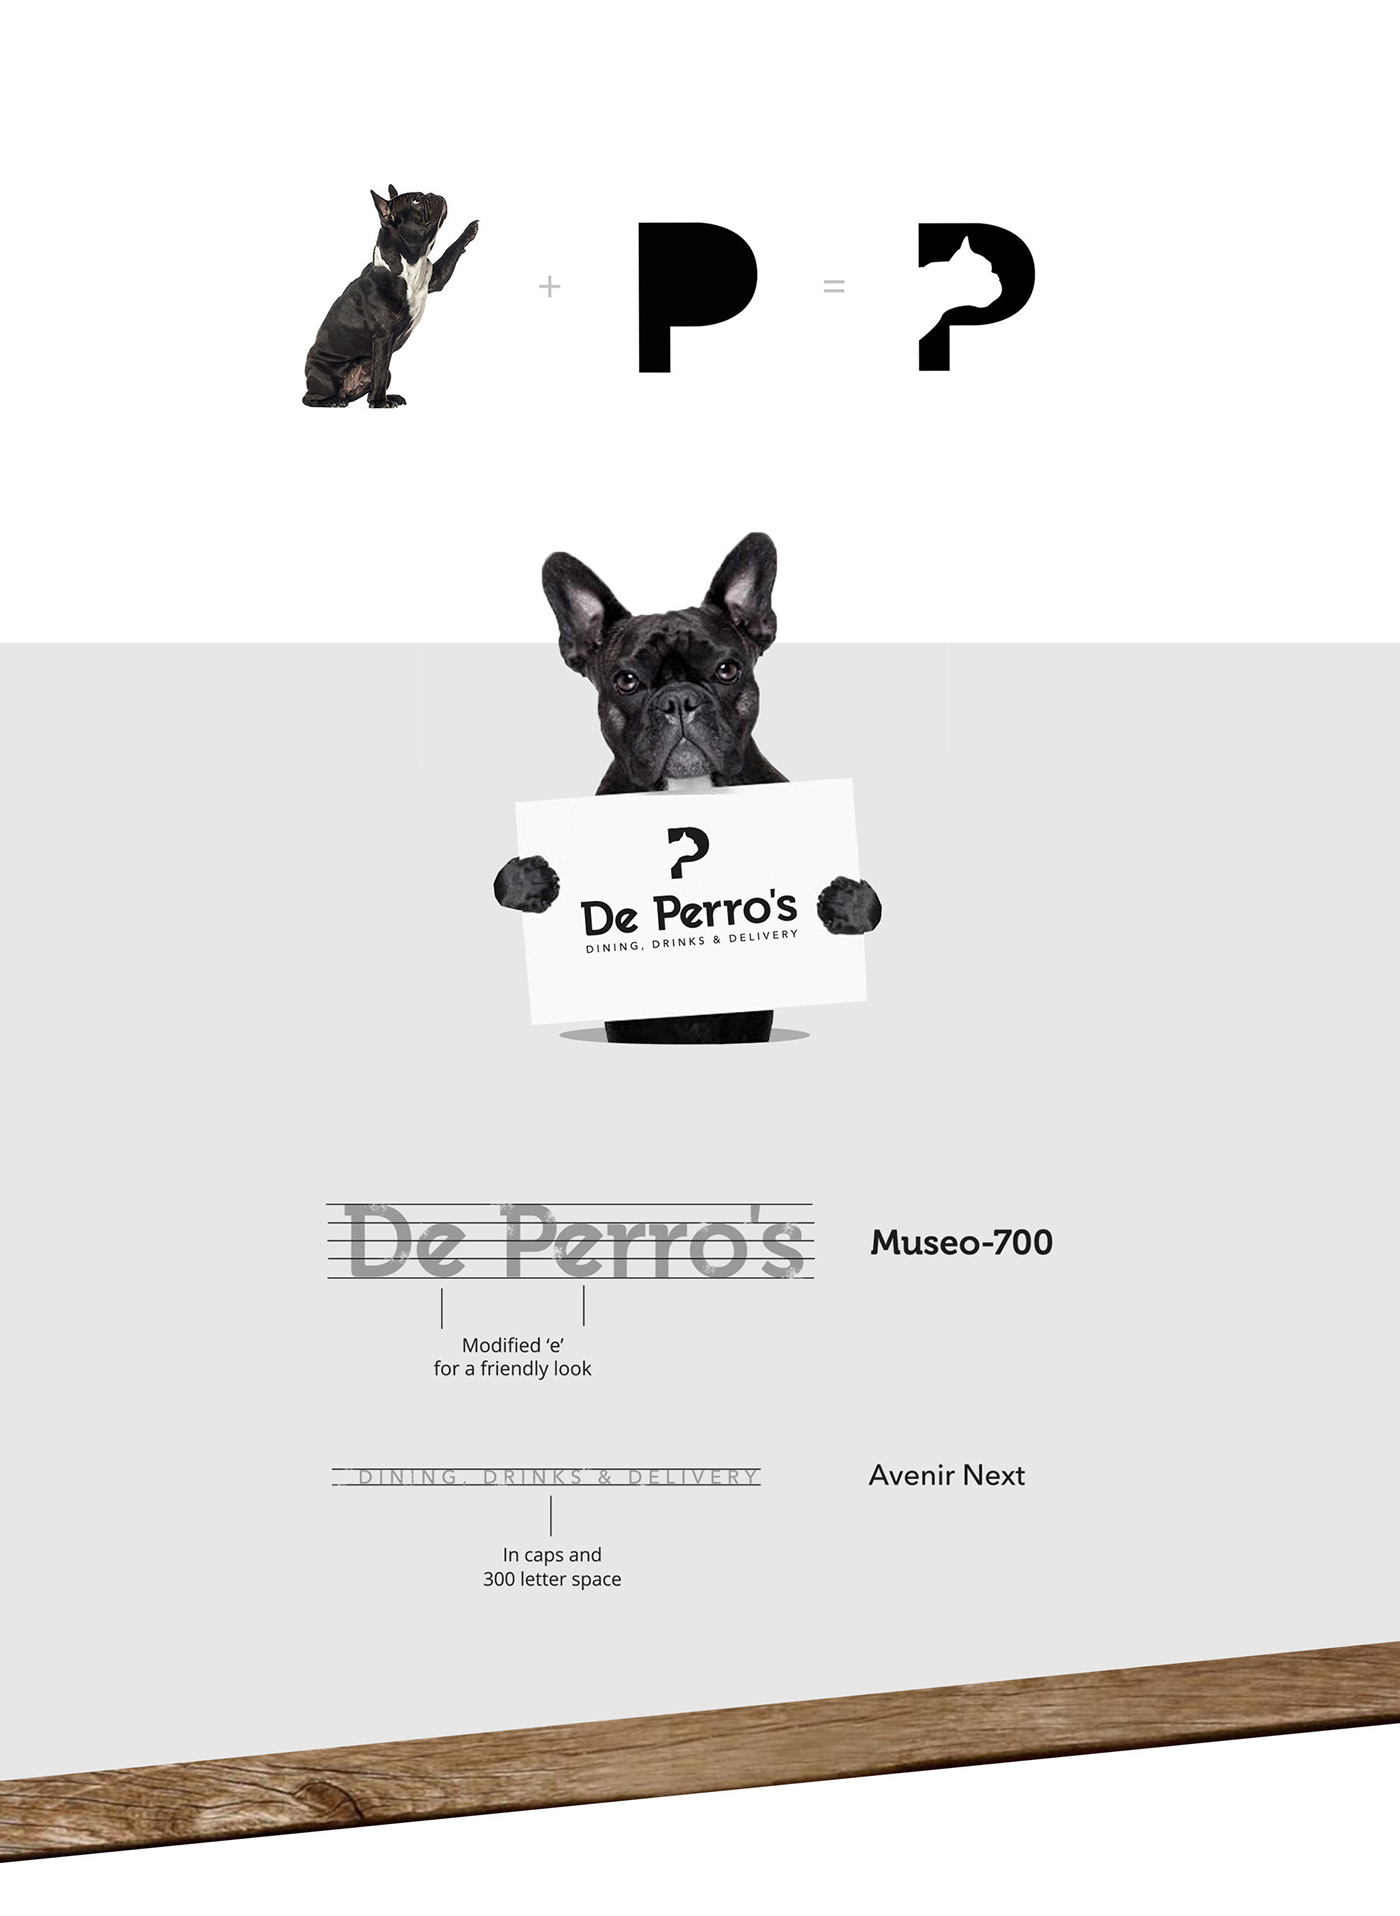 de perros perro's de perro's webdesign restaurant web design perros dutch restaurant branding restaurant schagen de perro's schagen spaans restaurant logo design restaurant